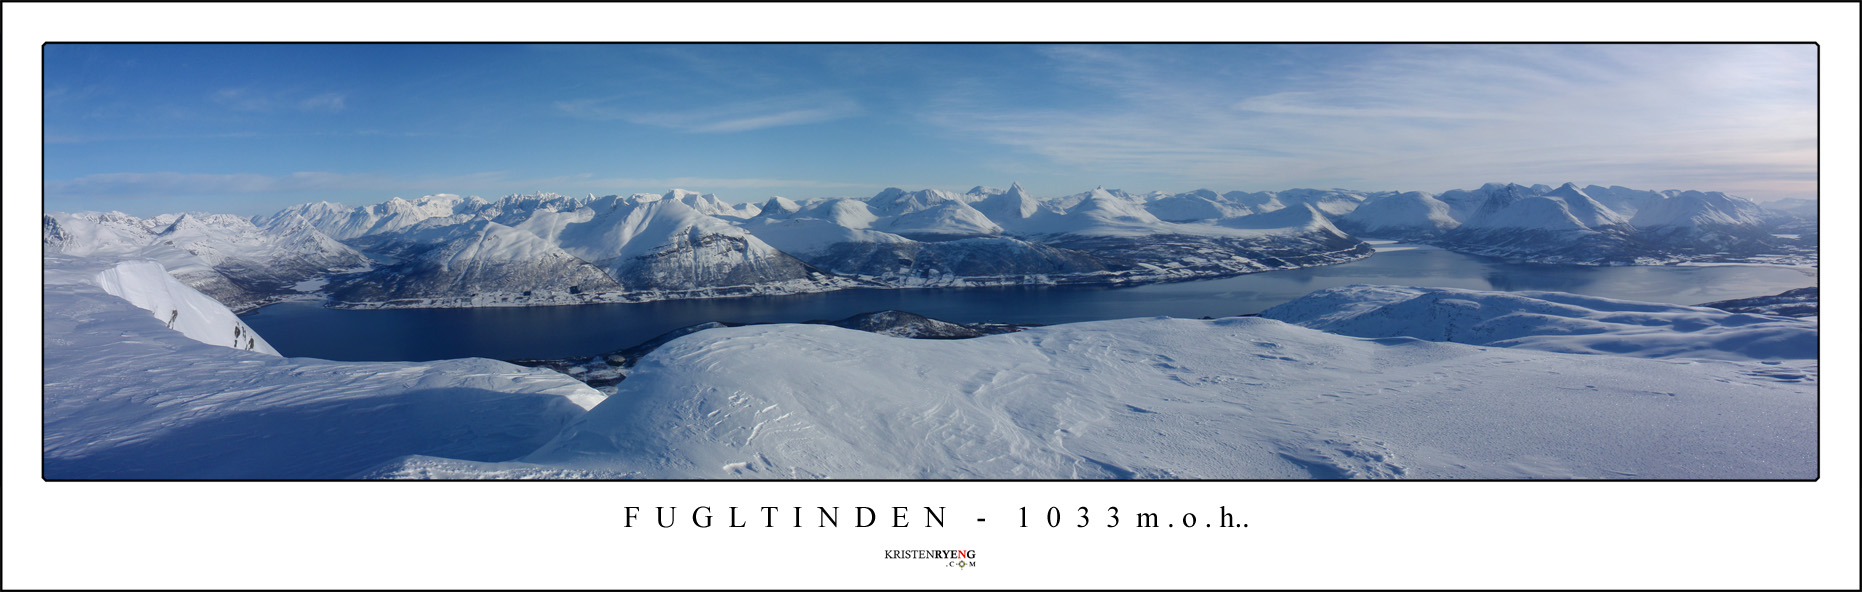 PanoramaFugltinden.jpg - Fugltinden - 1033 moh (Balsfjorden)